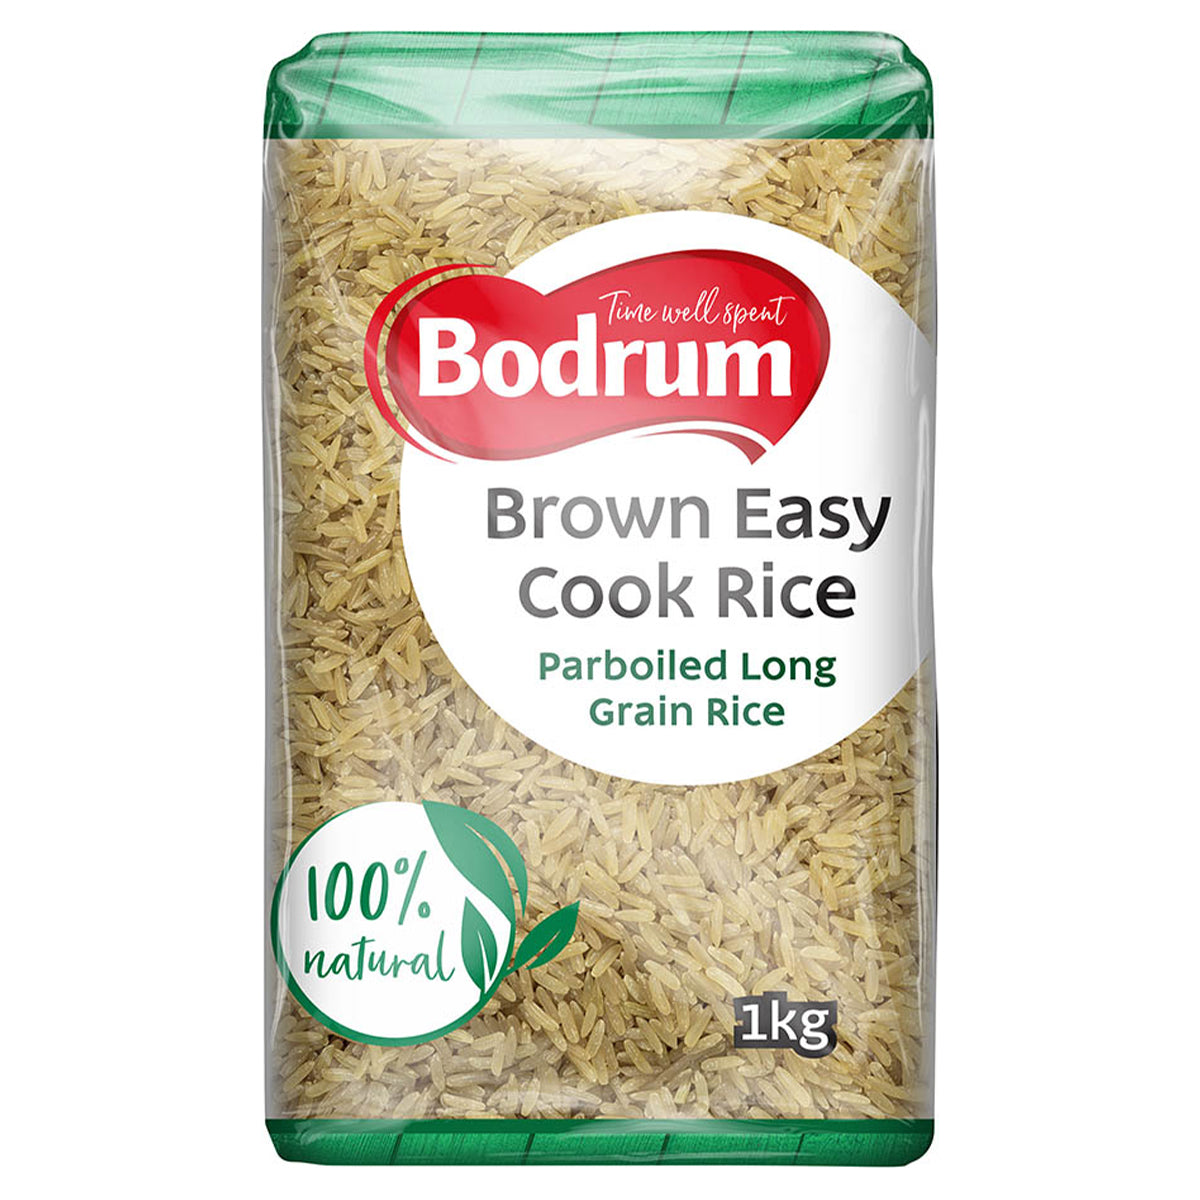 Bodrum - Brown Easy Cook Rice - 1kg by Bodrum.